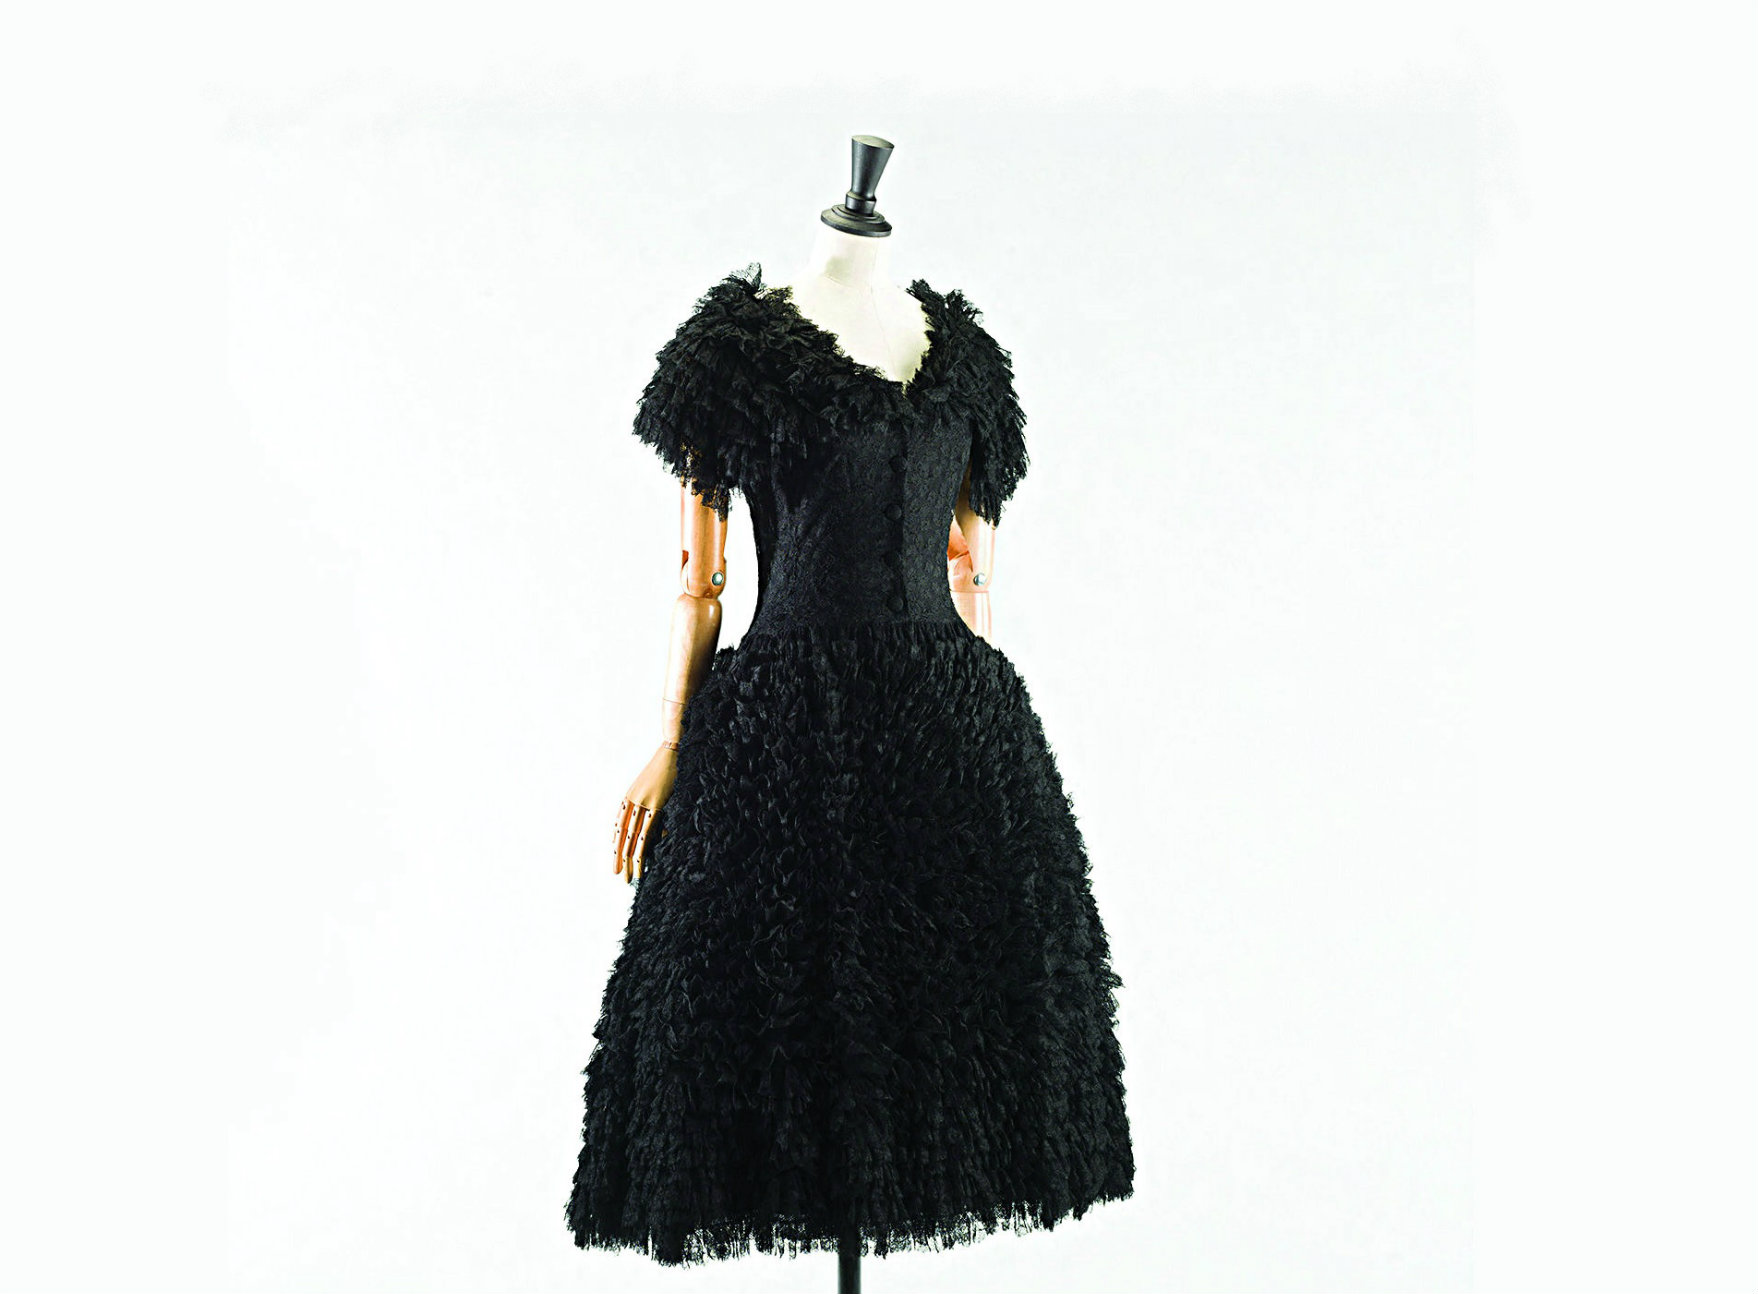 Cristóbal Balenciaga, Woman's Cocktail Dress and Coat, 1957